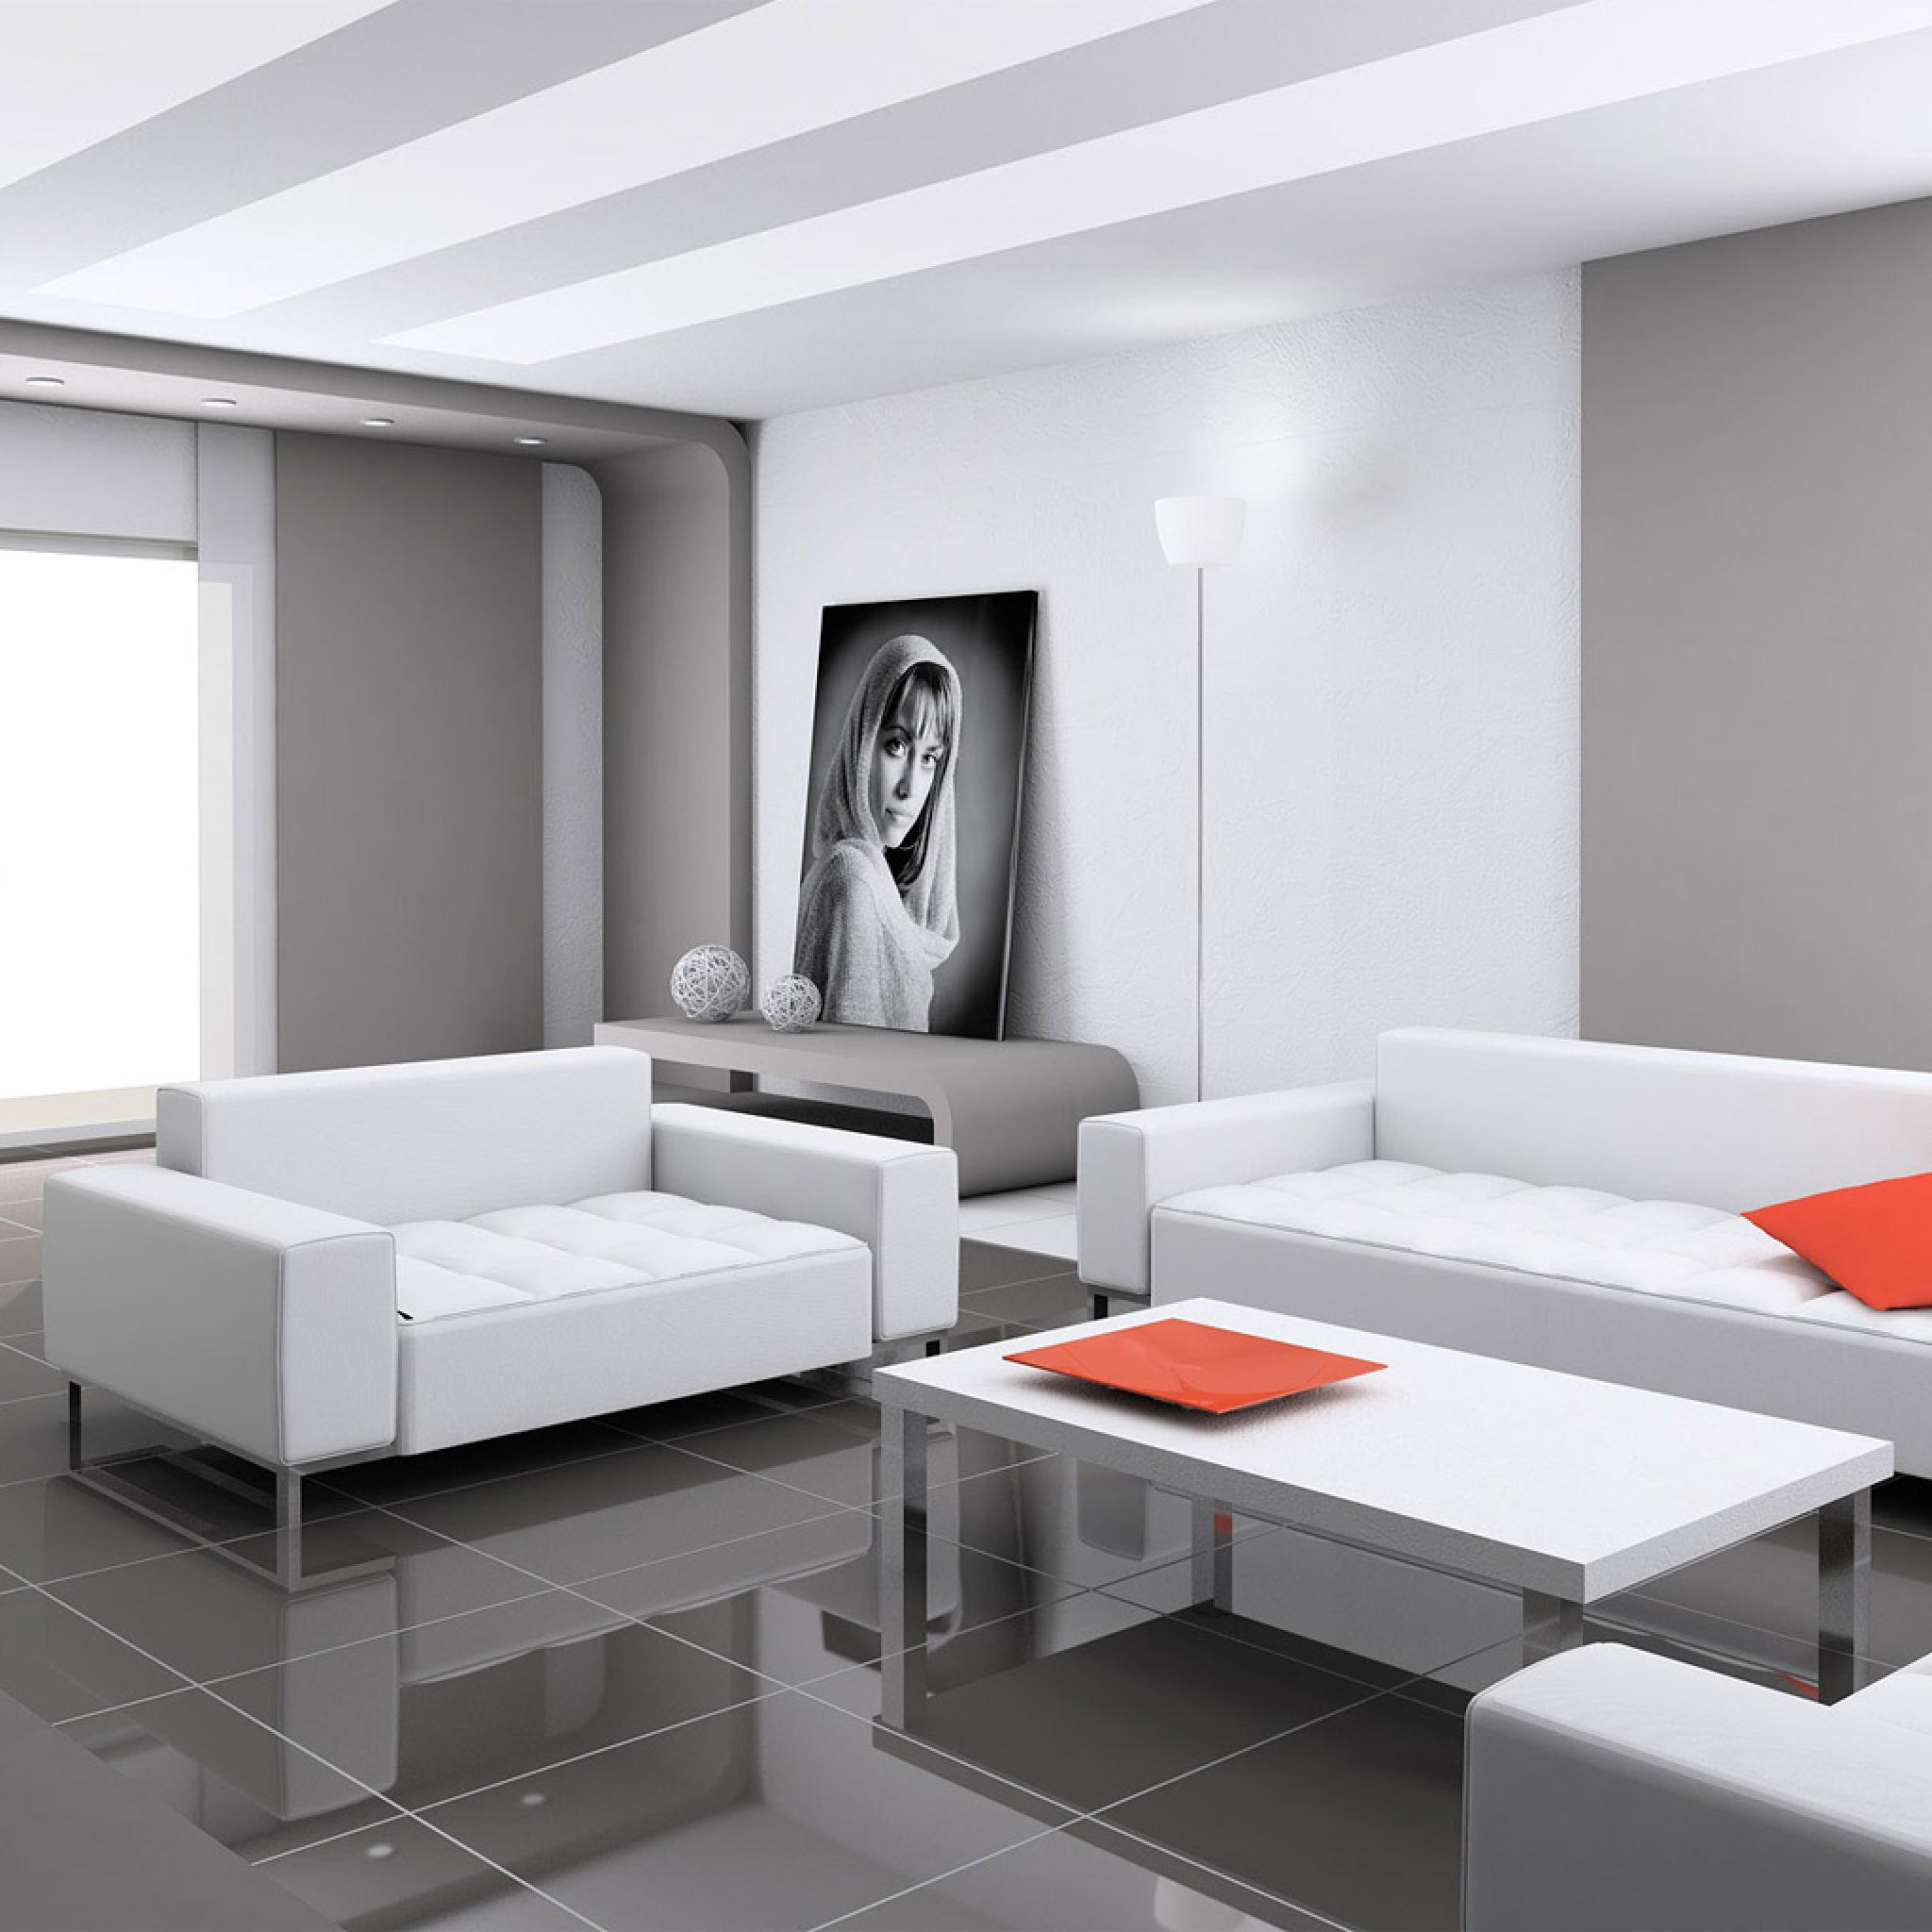 Minimalist Design Living Room
 Miscellaneous Minimalist Living Room Design Ideas iPad